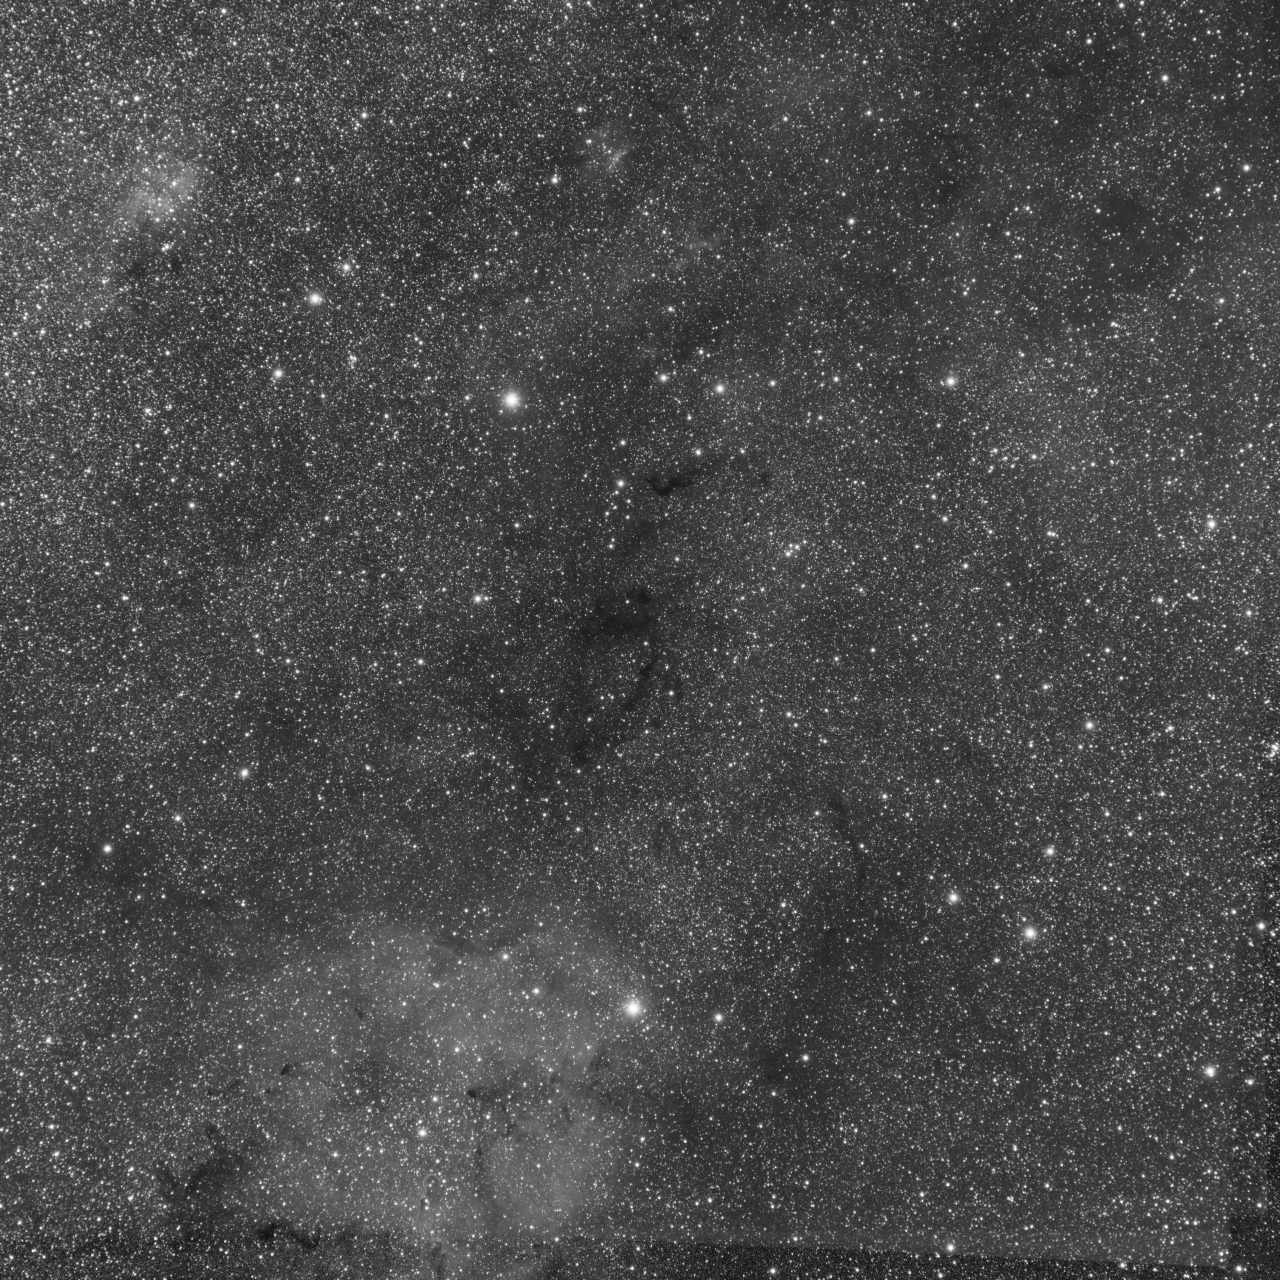 Cepheus on Barnard 170 - R